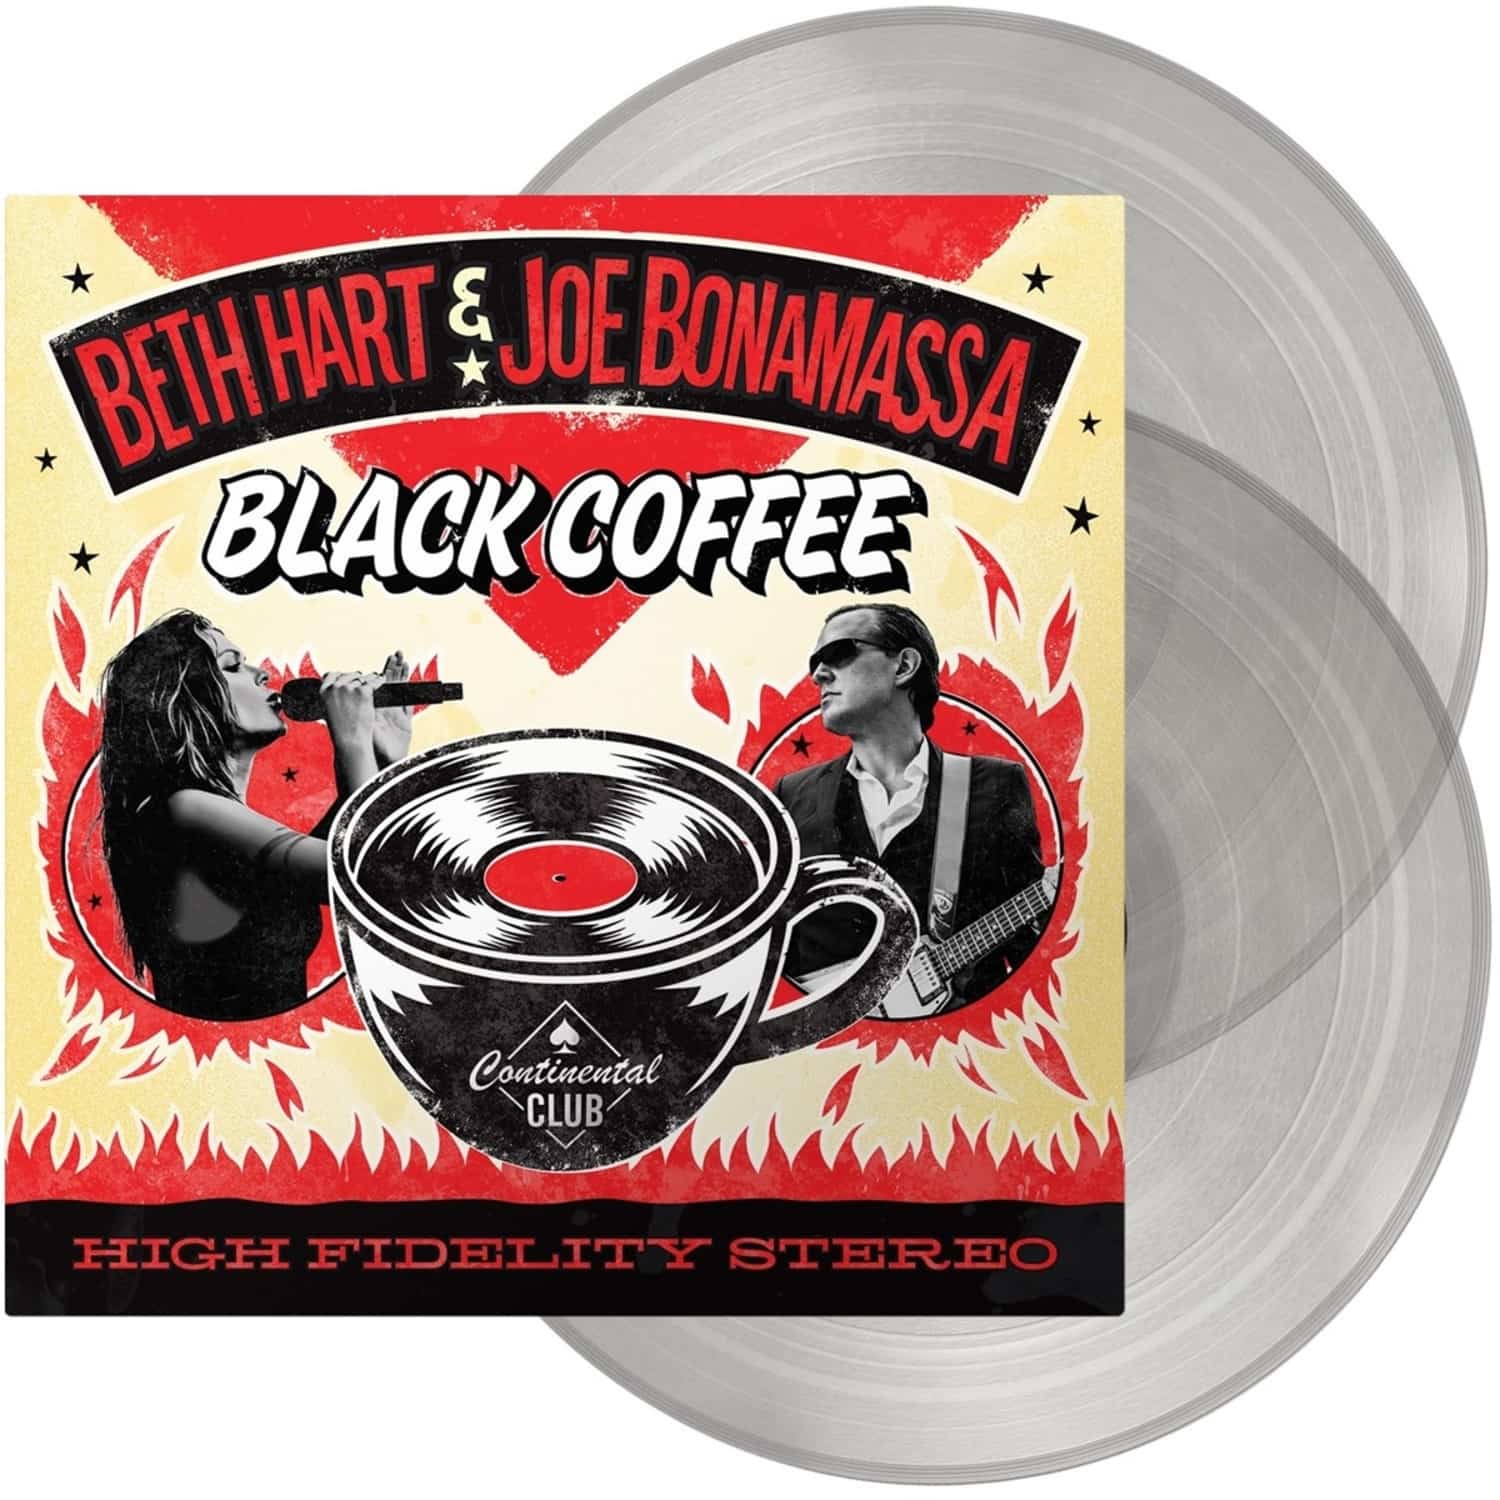 Beth Hart / Joe Bonamassa - BLACK COFFEE 